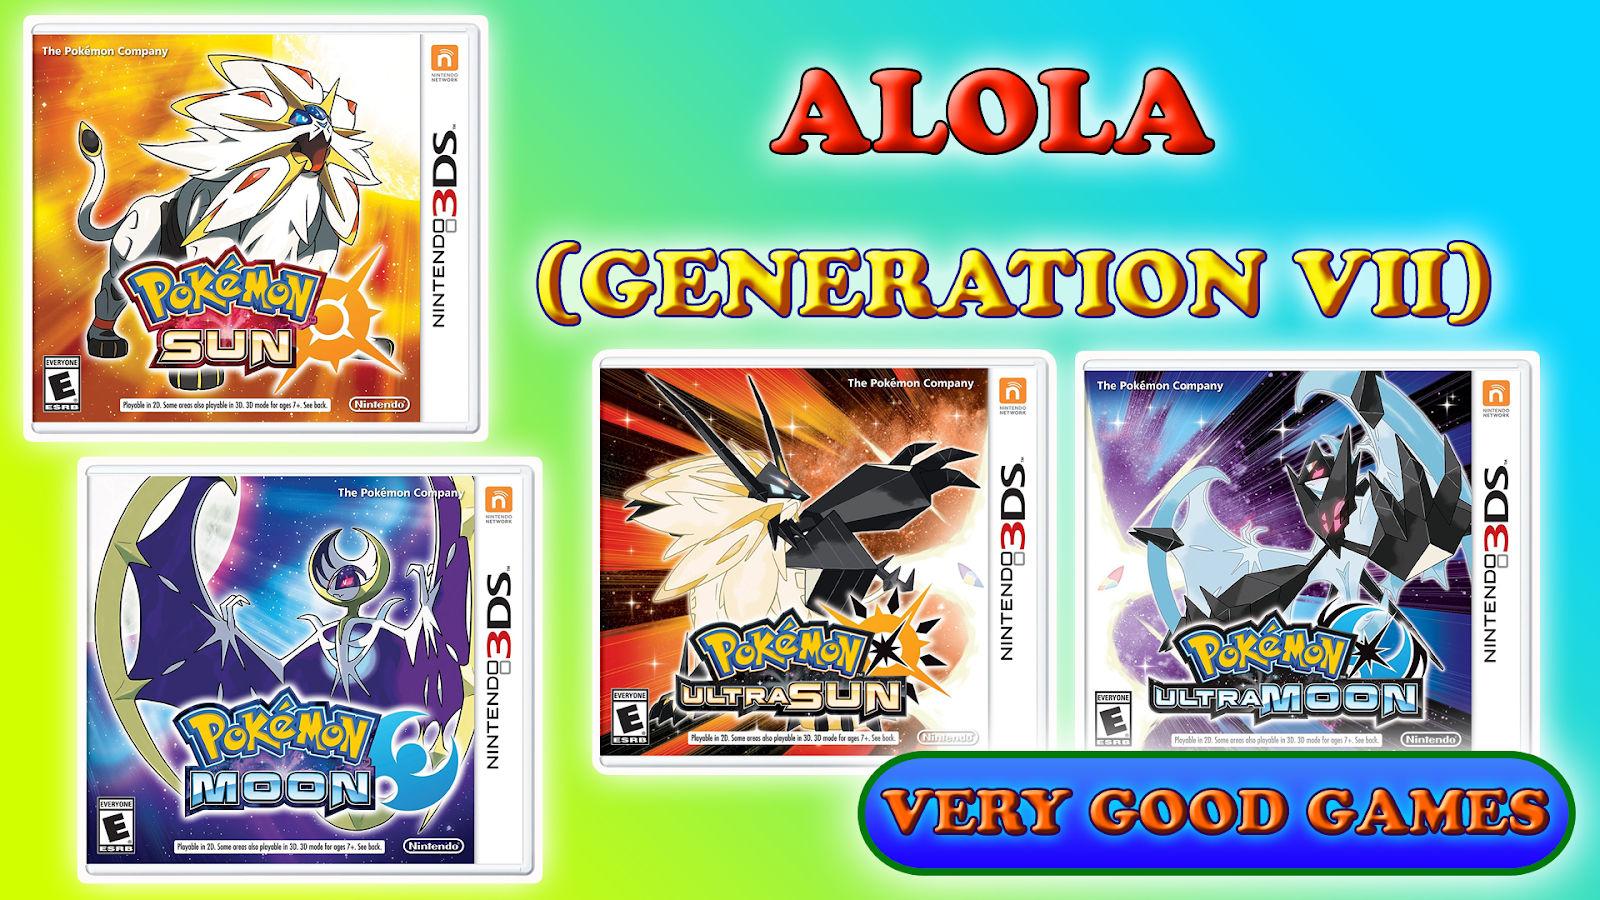 Pokemon games of the Generation VII in the Alola Region